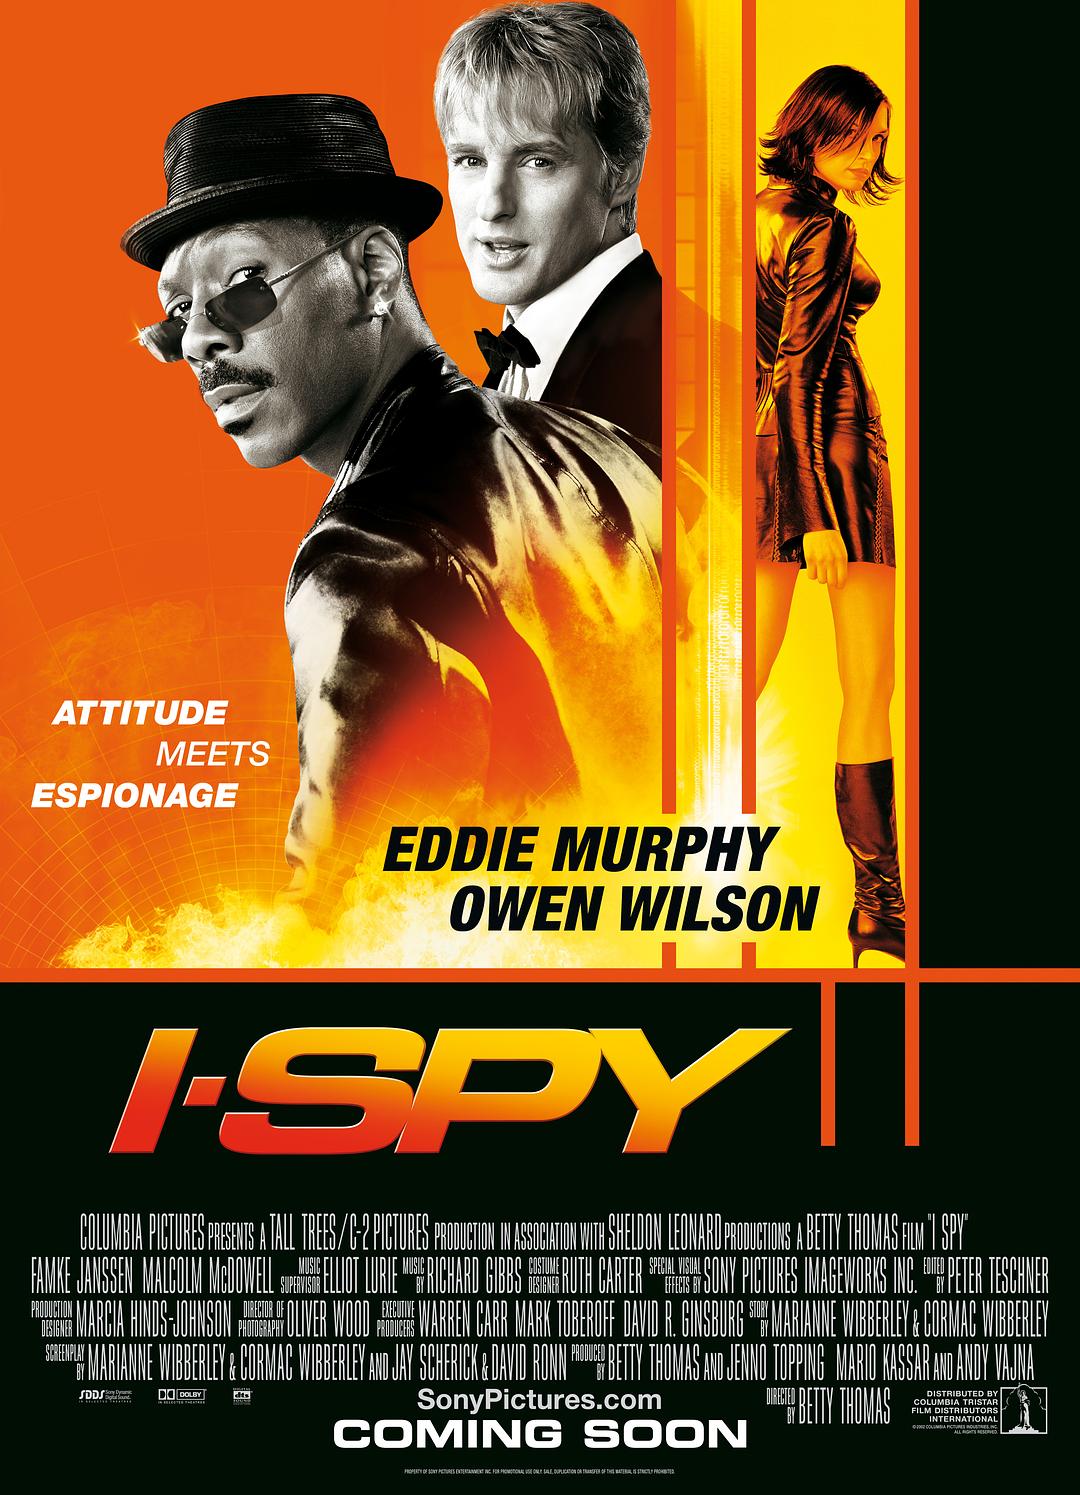 我是间谍.I.Spy.2002.1080p.BluRay.Remux.DTS-HD.5.1@ 21.34GB